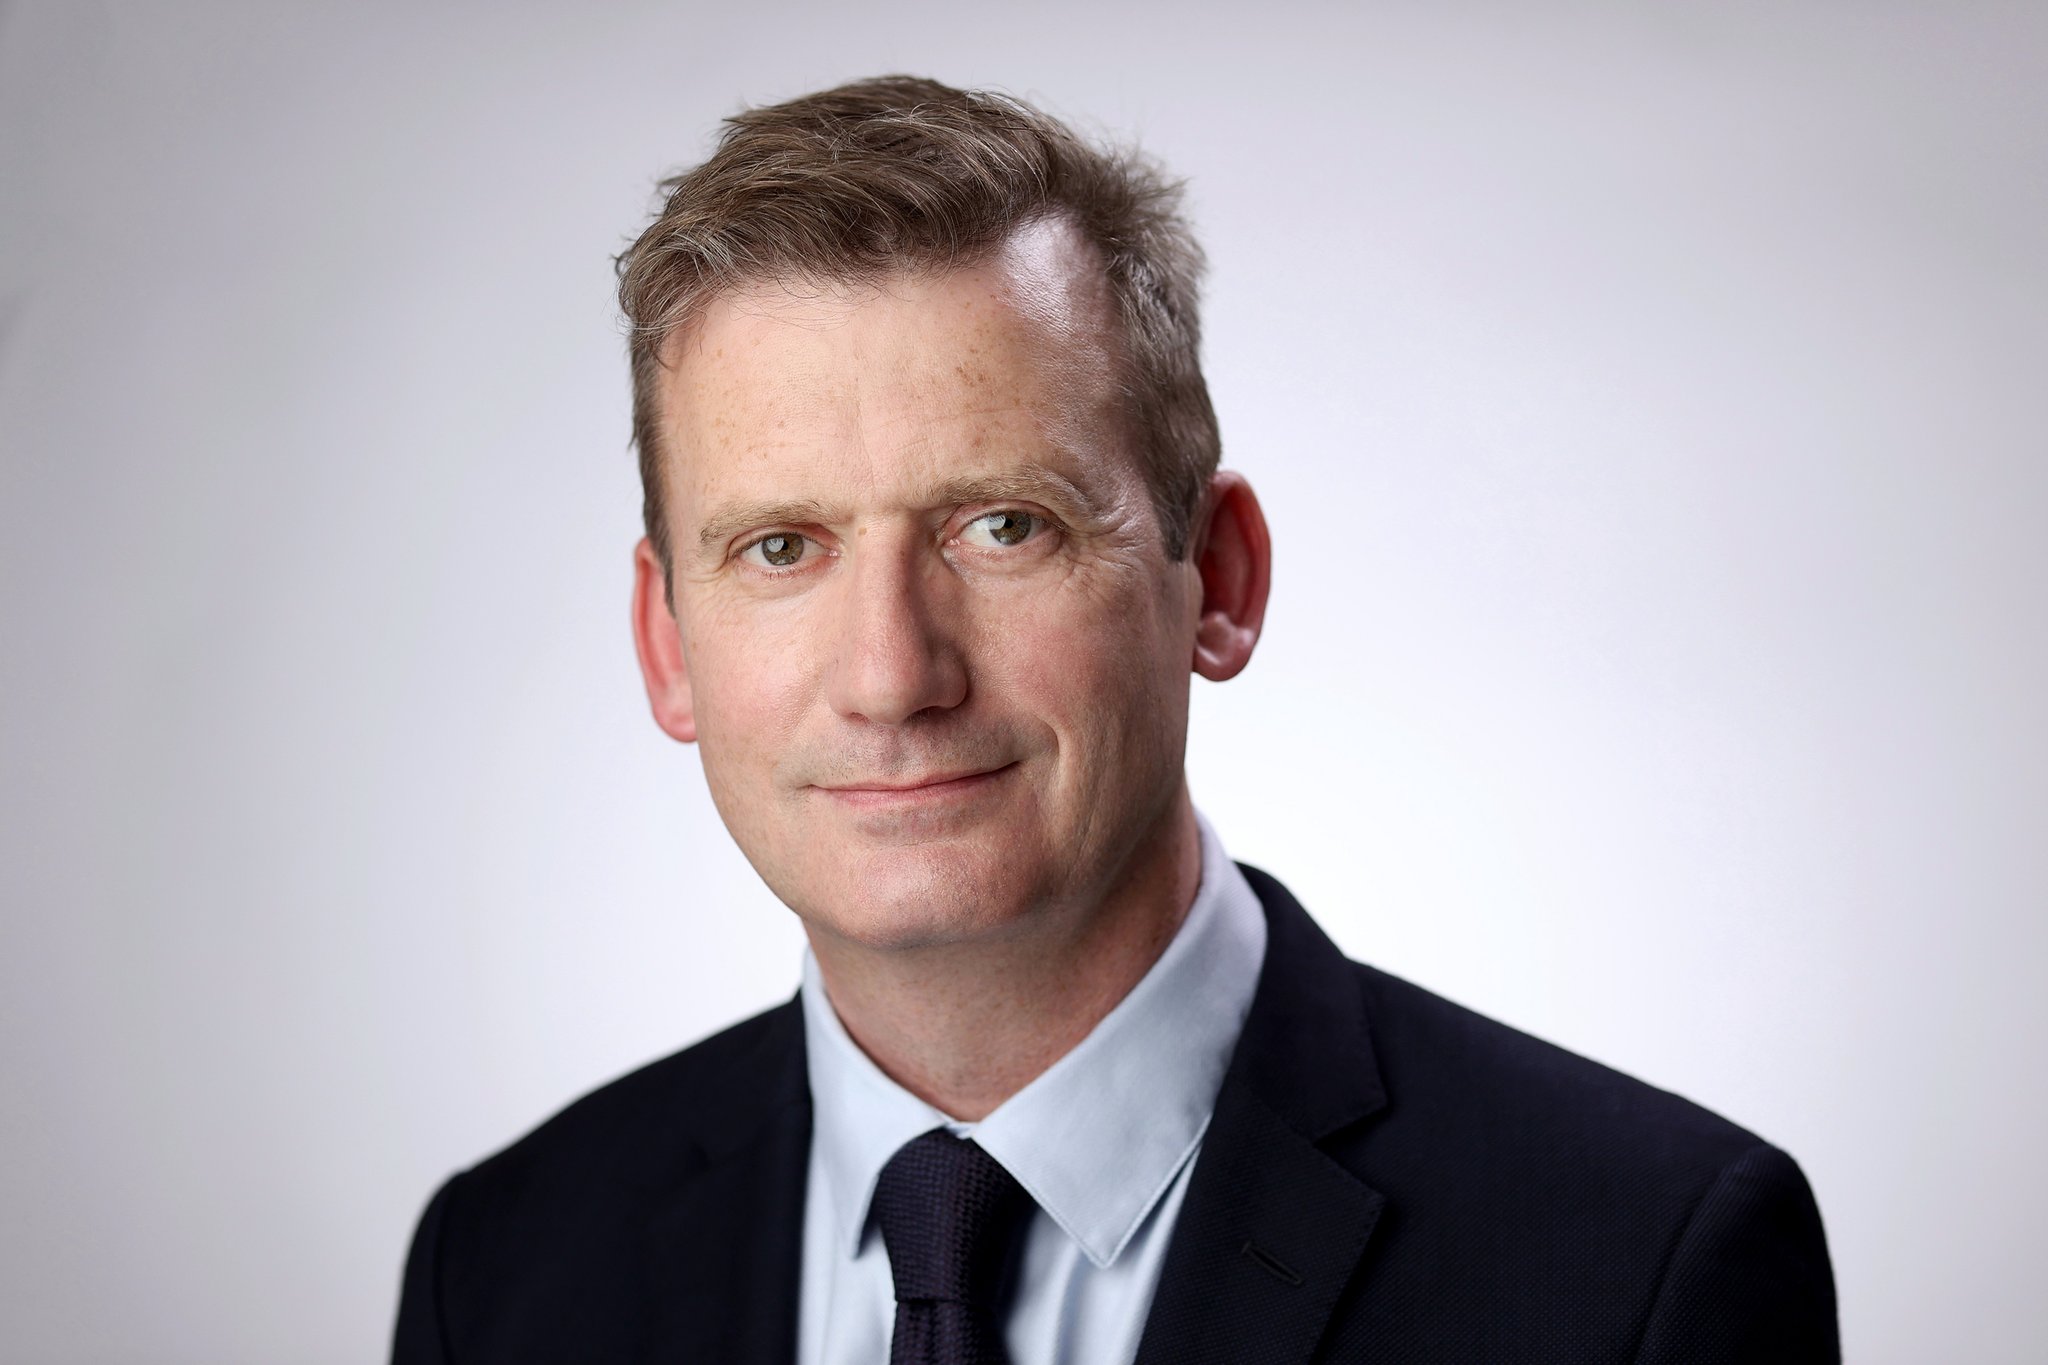 Law Society of Ireland appoints Mark Garrett as director general